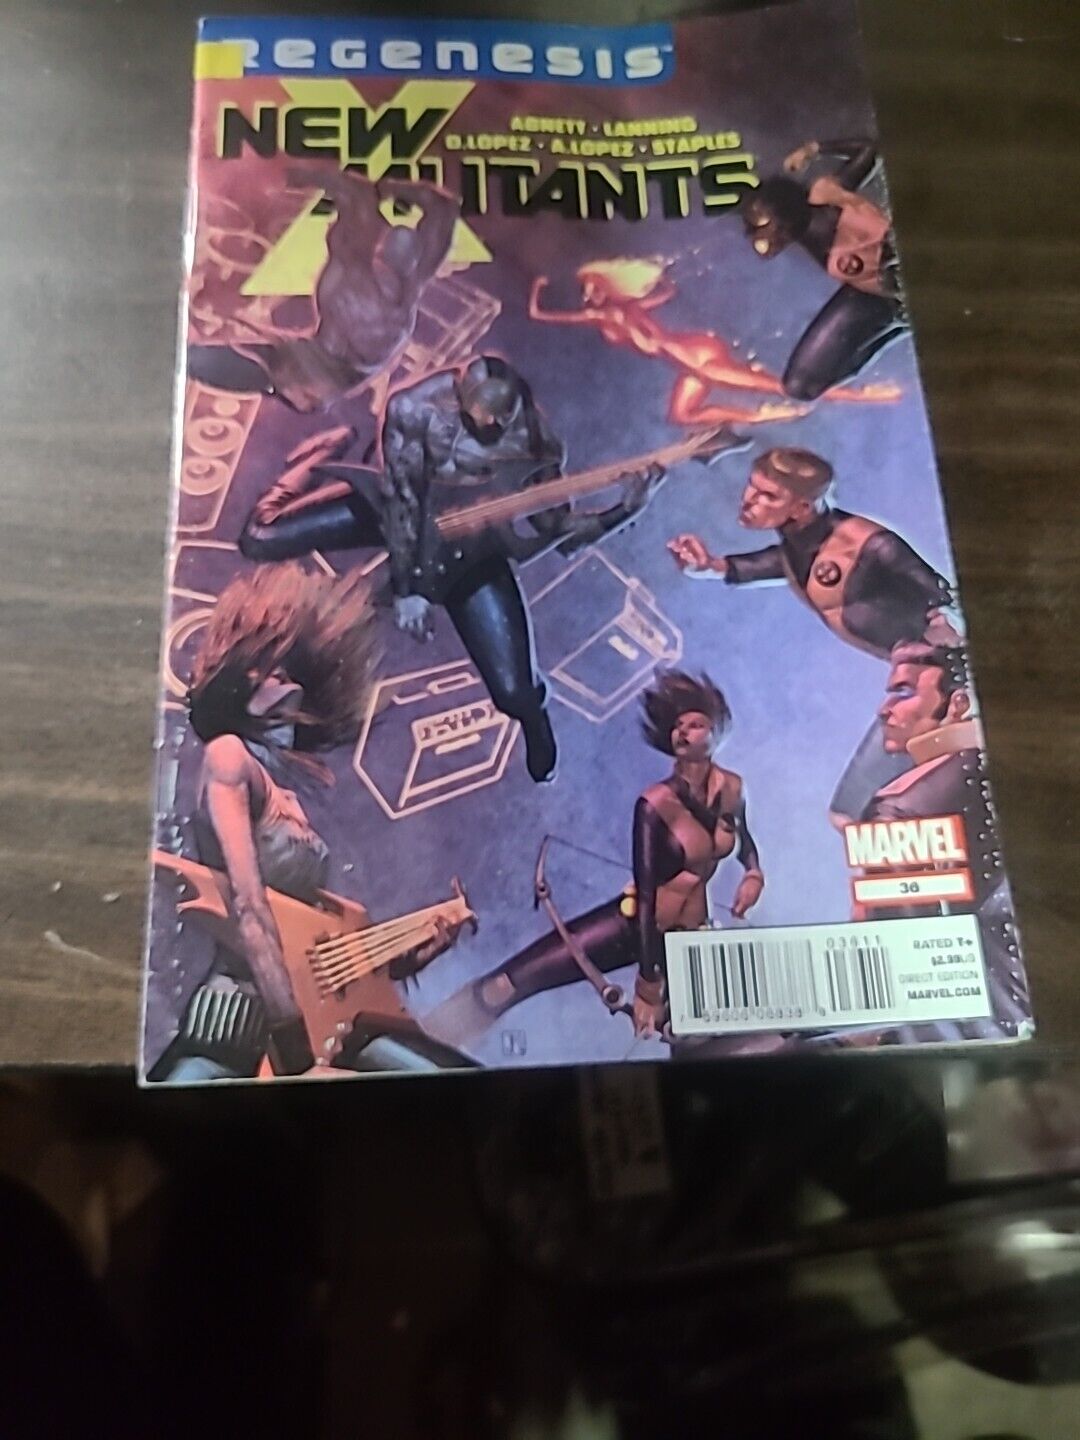 Marvel Regenesis New Mutants Comic Book